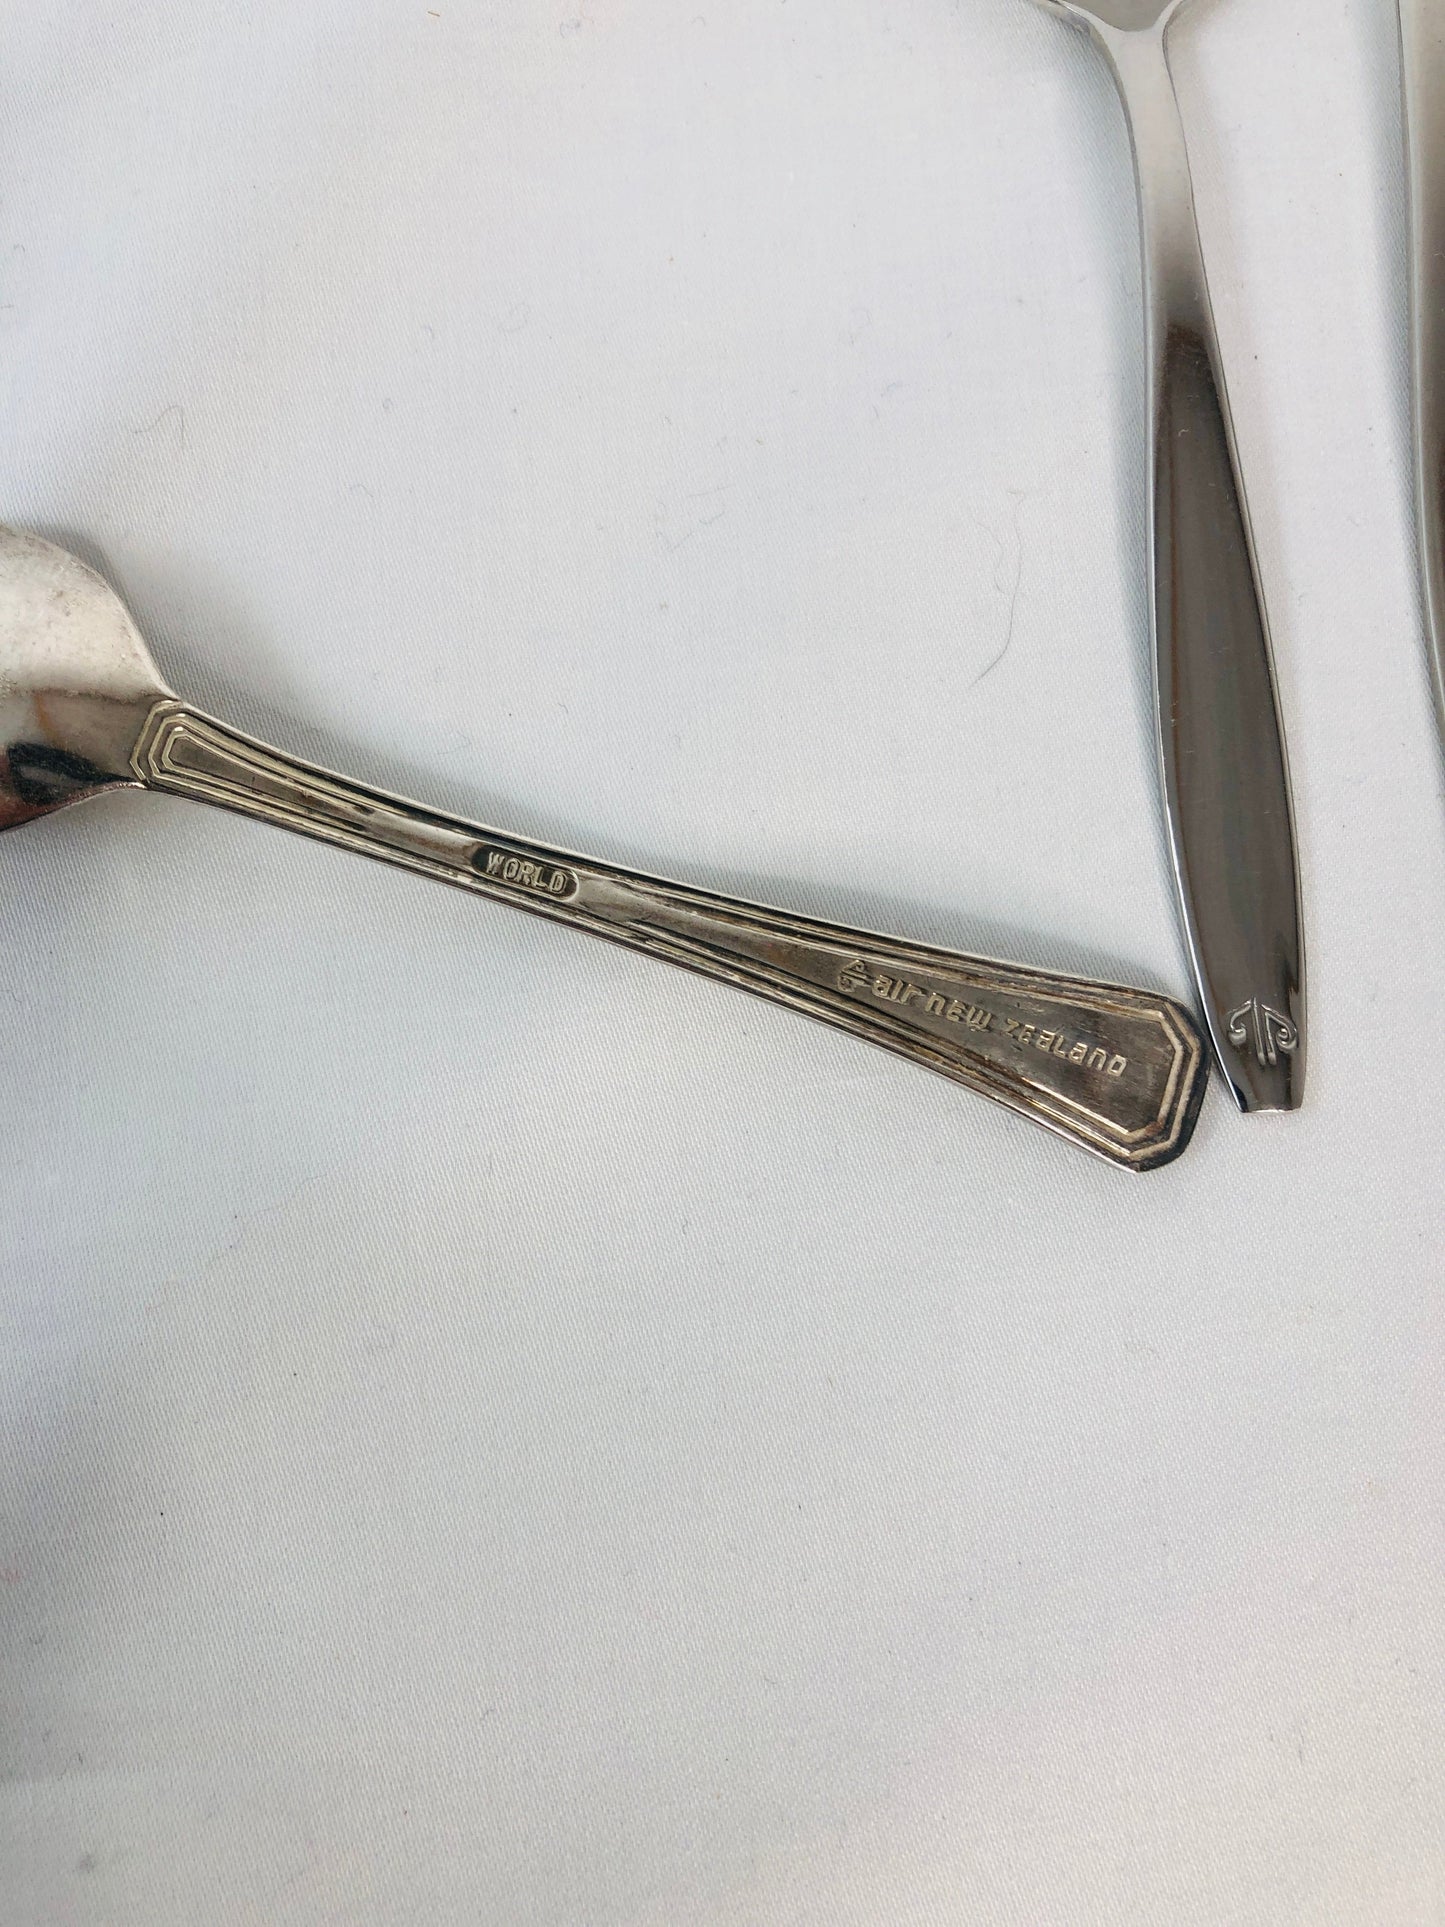 
                  
                    Air New Zealand Cutlery (15326)
                  
                